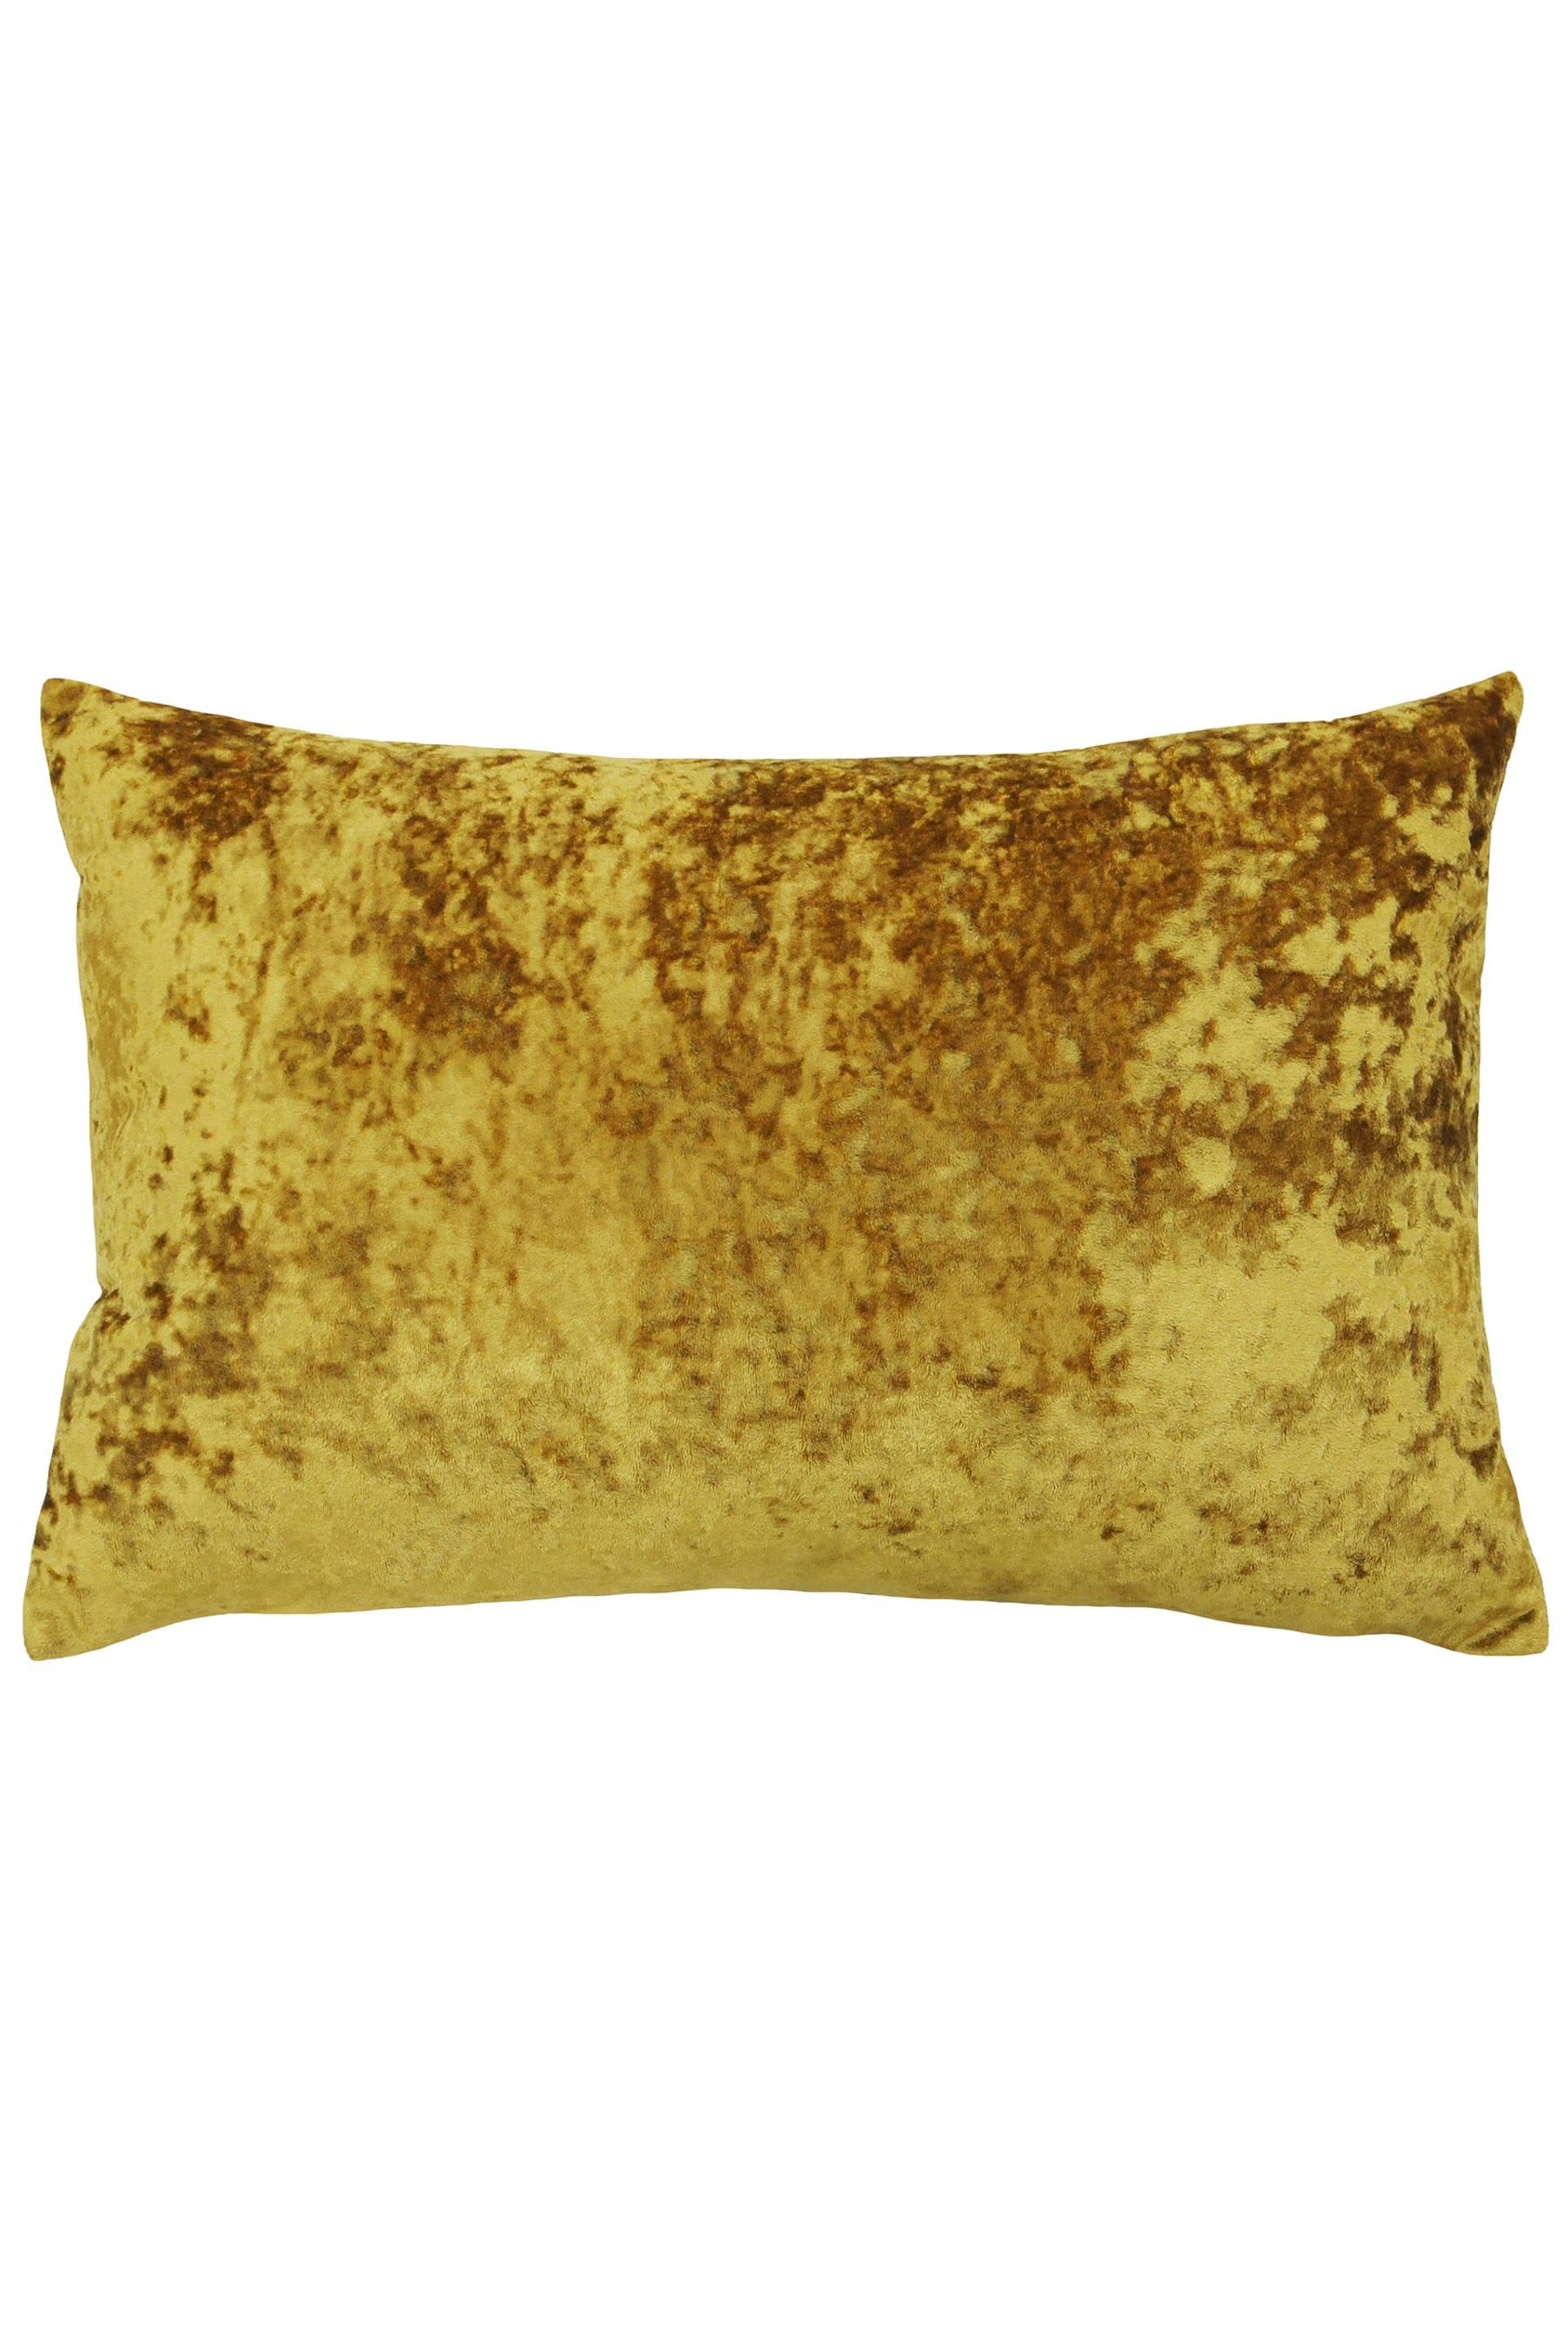 Riva Paoletti Ochre Yellow Verona Crushed Velvet Rectangular Polyester Filled Cushion - Image 1 of 2